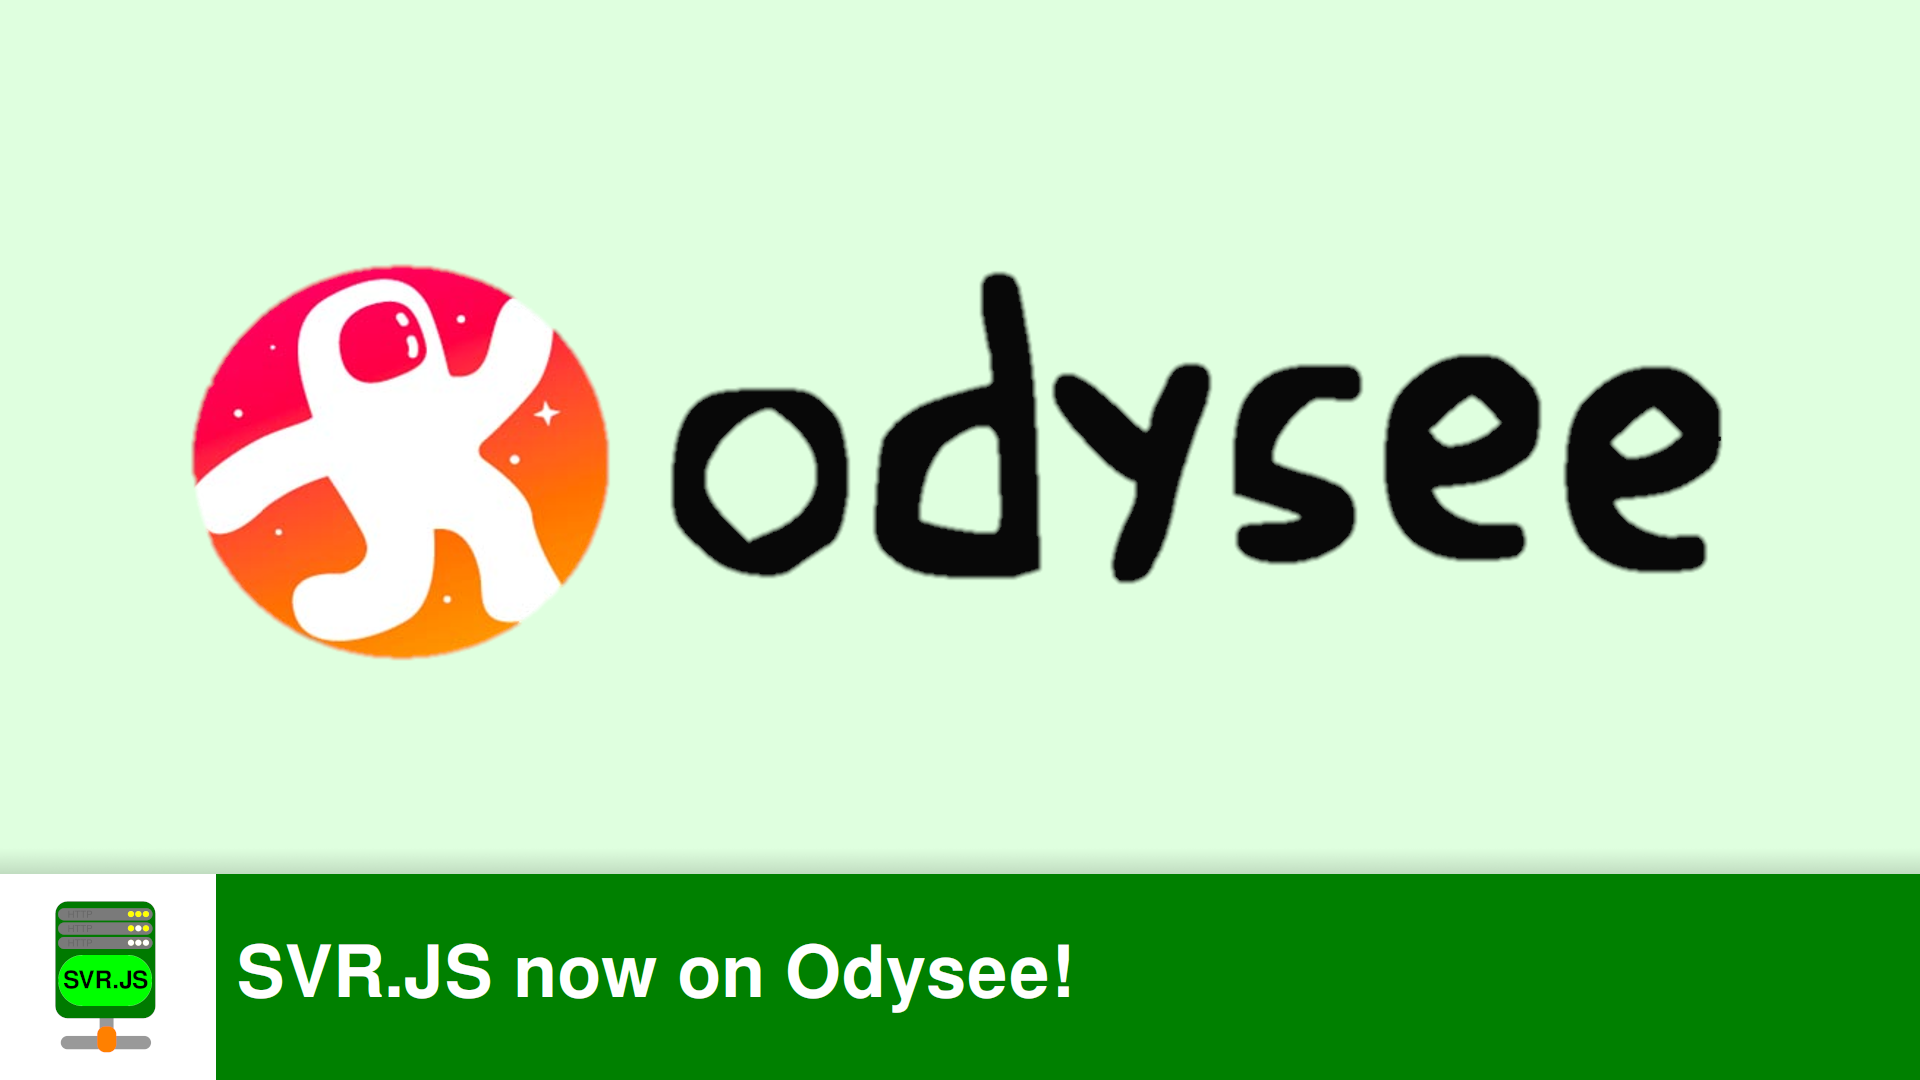 SVR.JS now on Odysee!